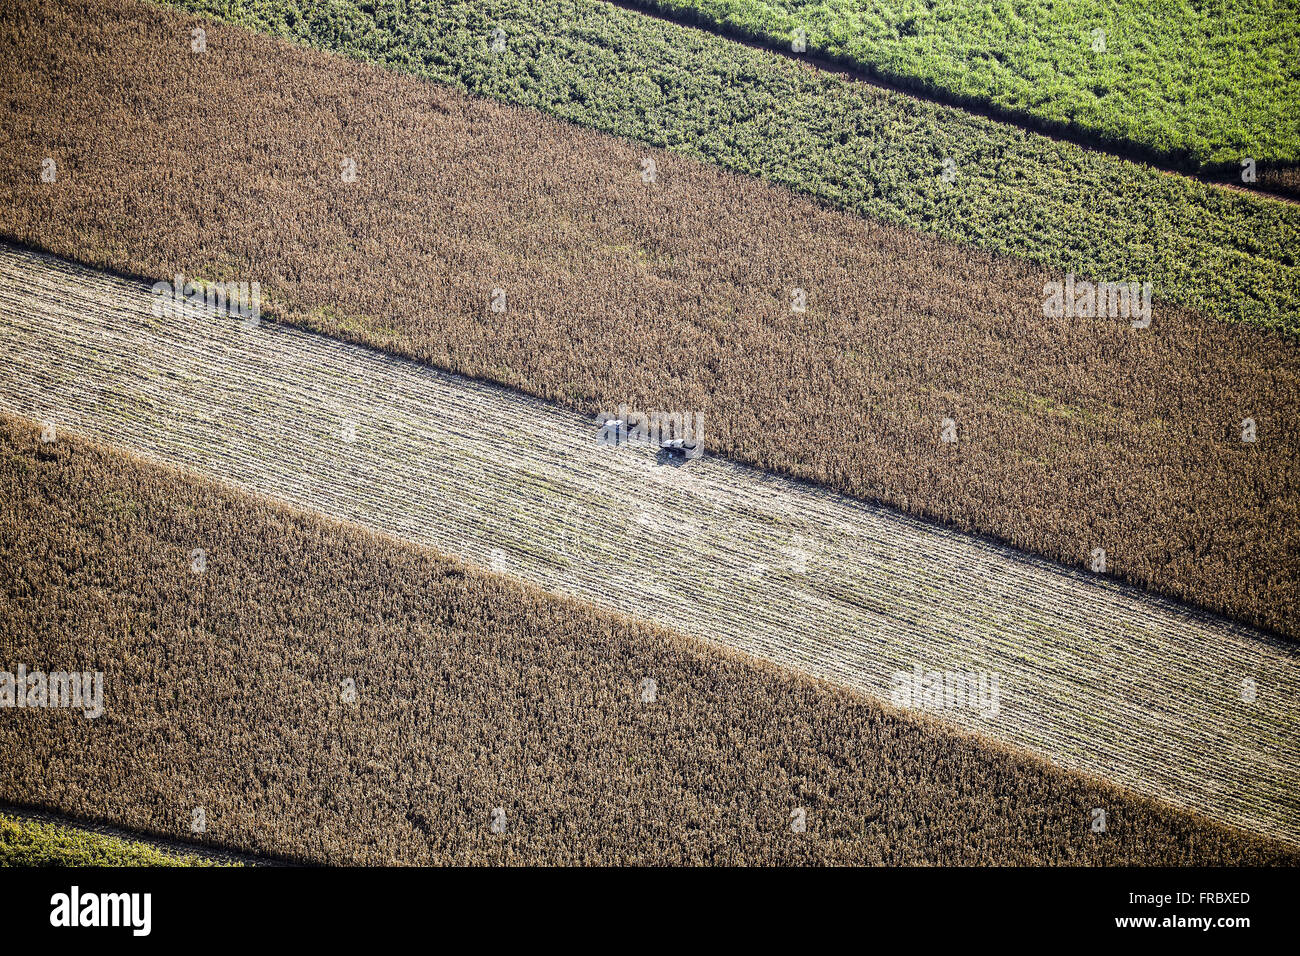 Aerial view of combine harvesting corn Stock Photo